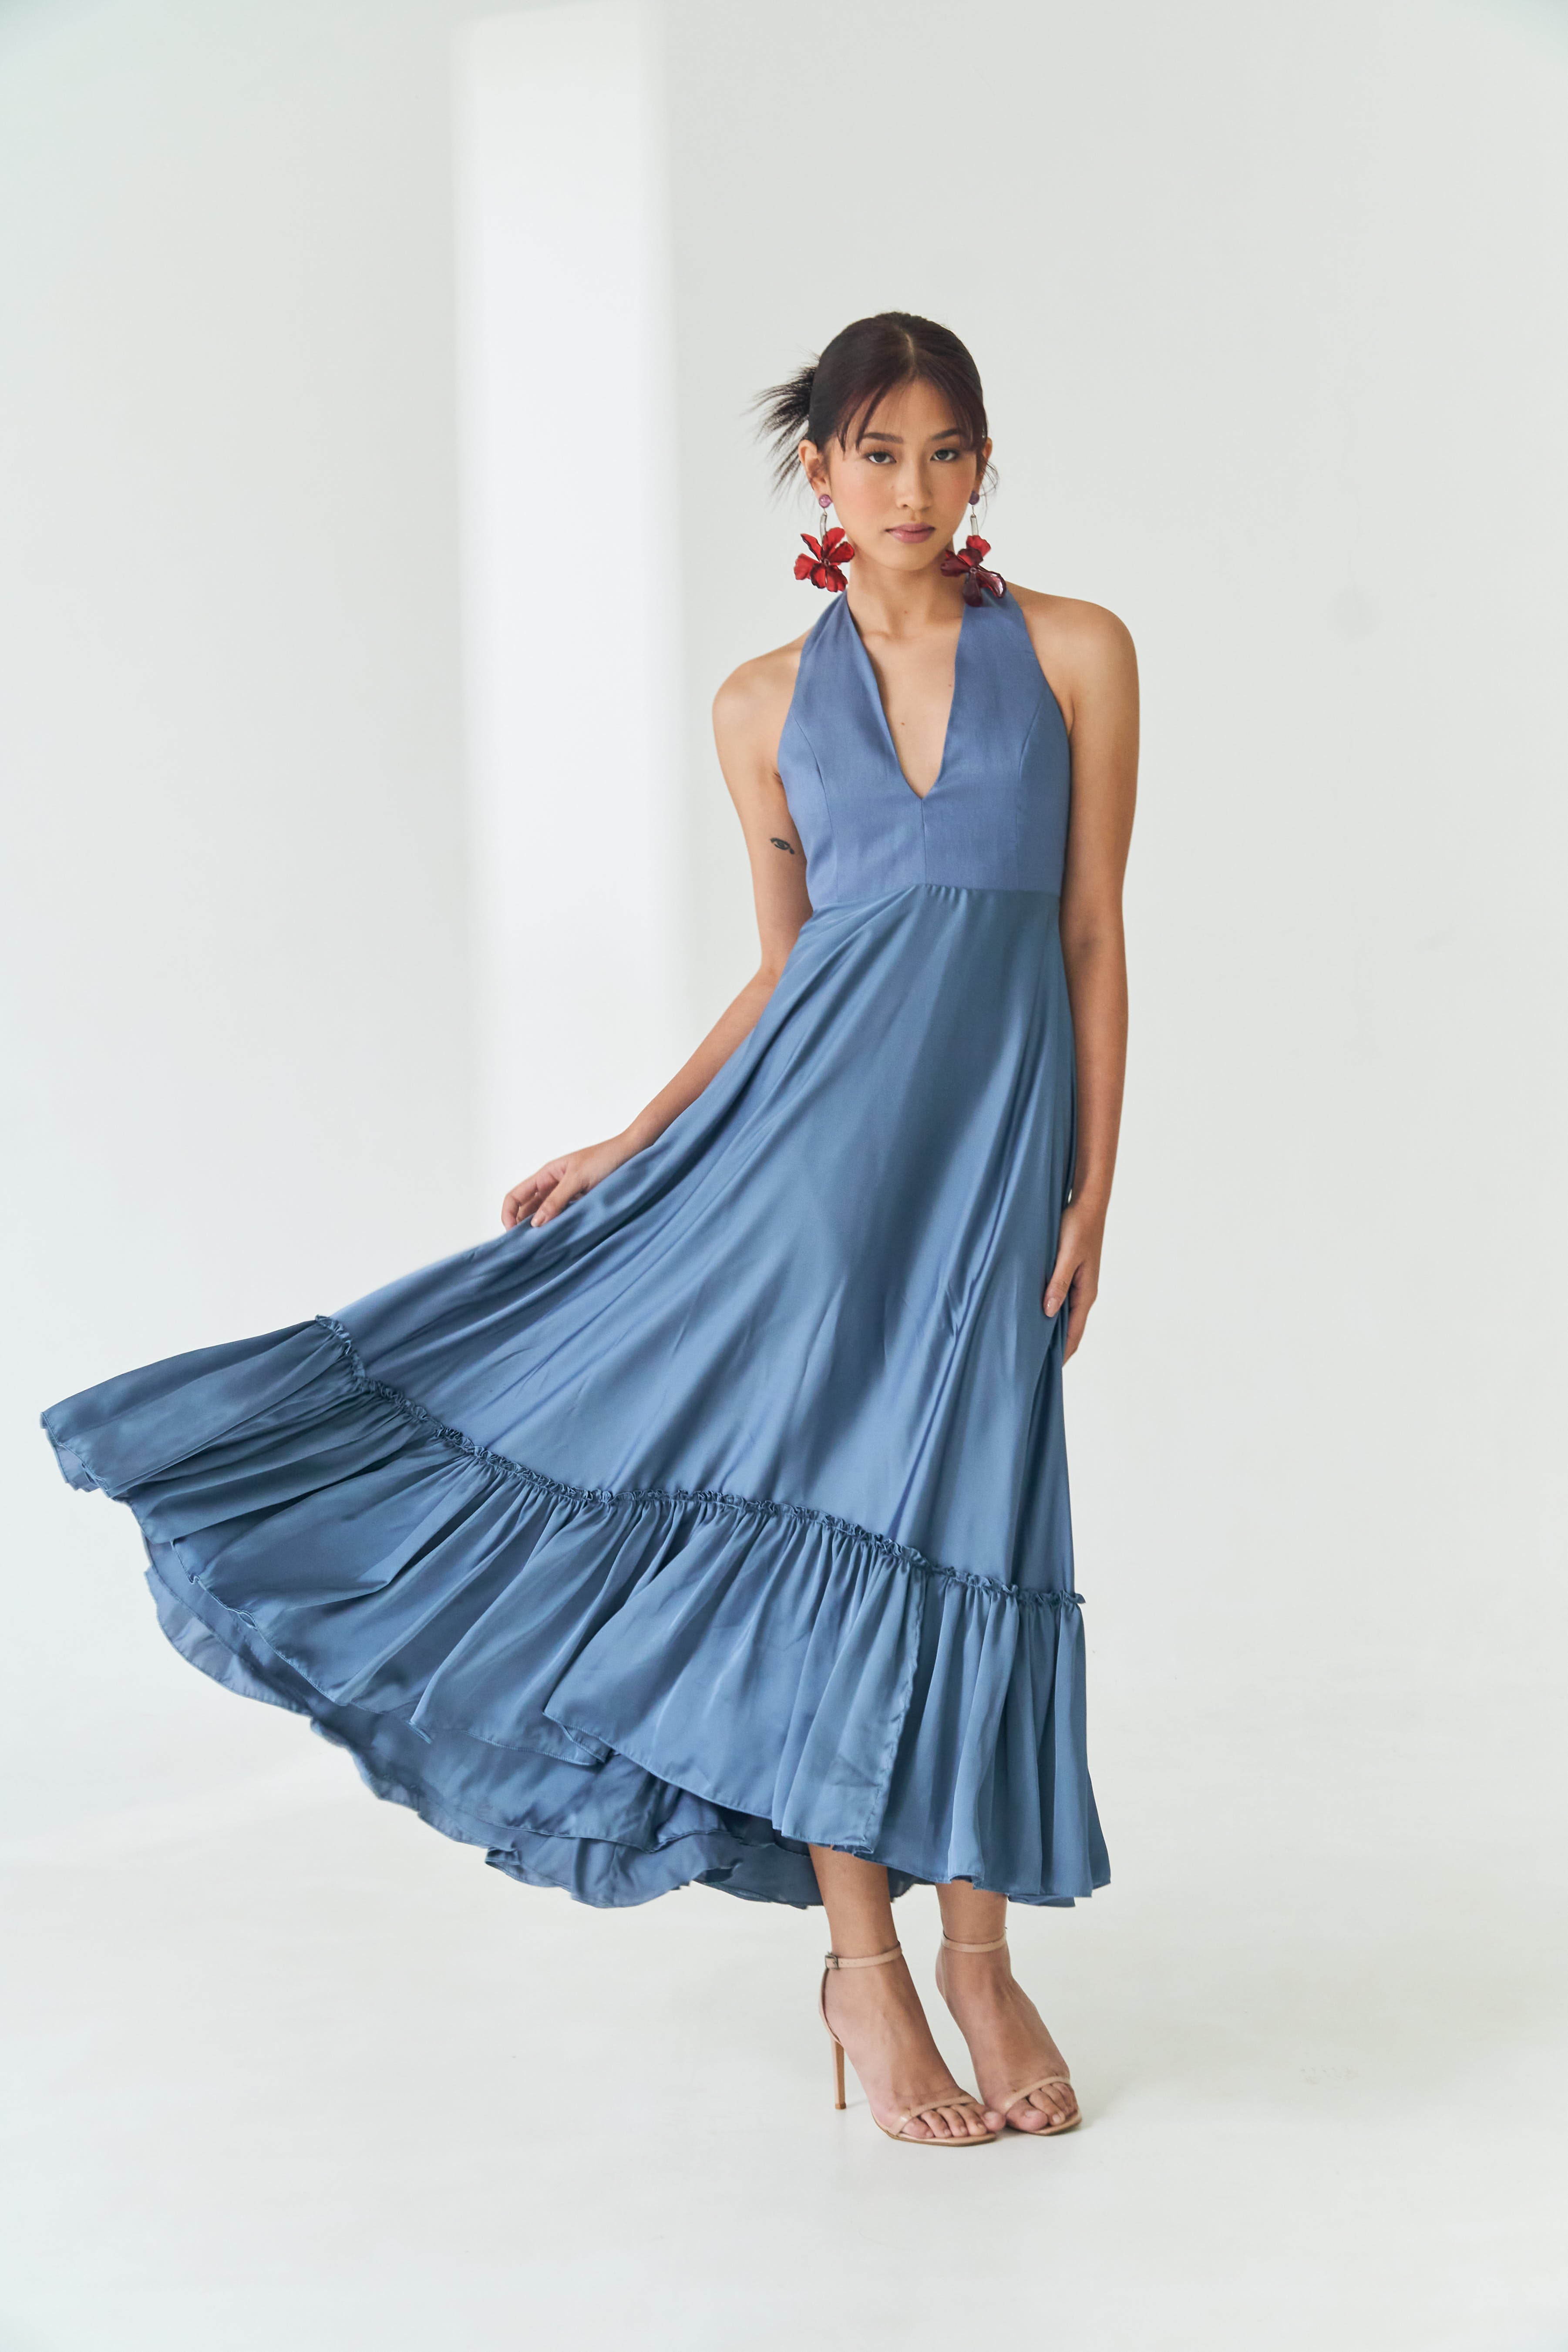 Blue Halter Dress